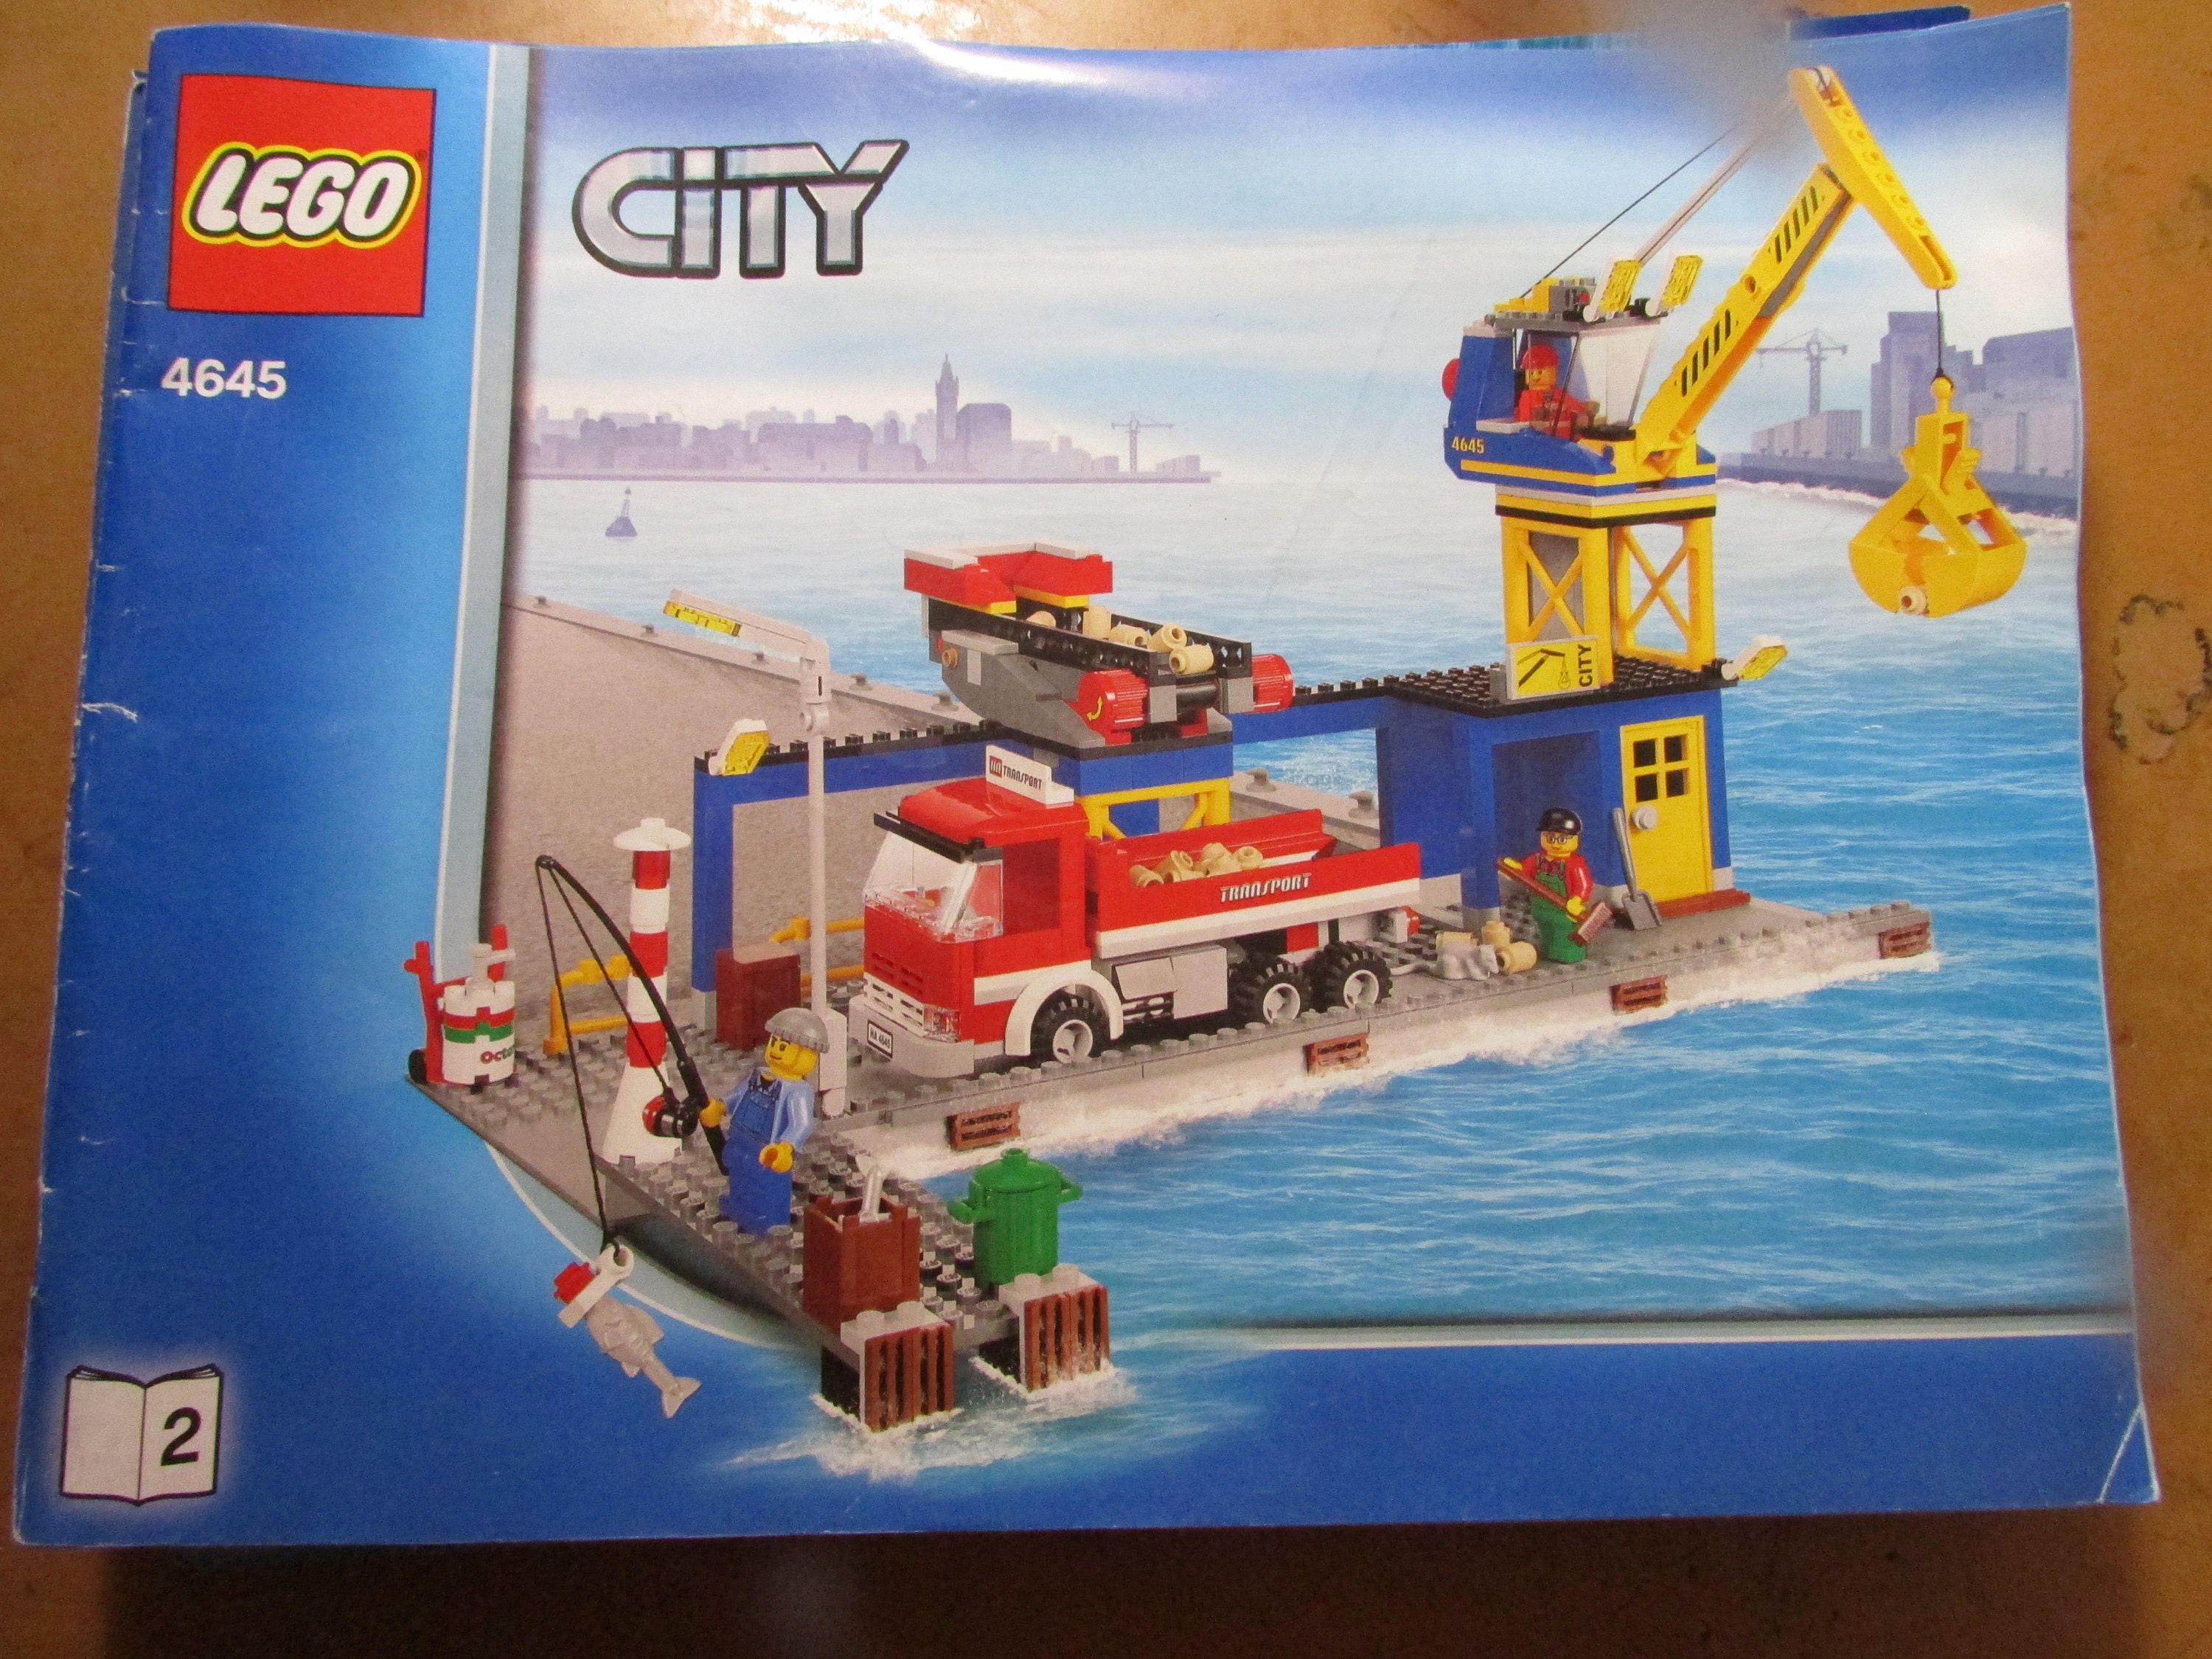 Hong Kong Forskel Evakuering Lego City 4645 Booklet Two Harbor Loading Dock Instruction - Etsy